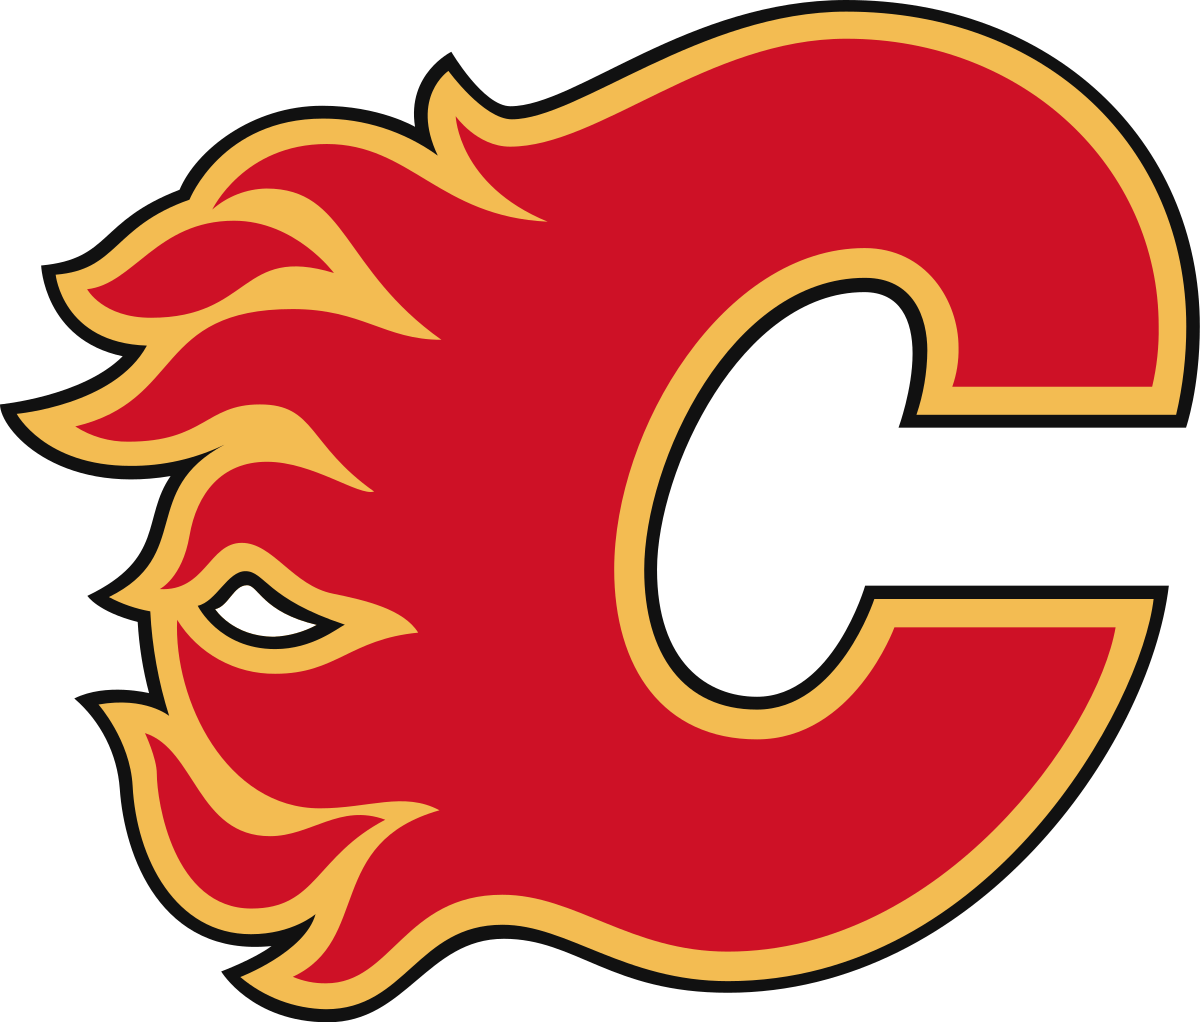 Big Red C Logo - Calgary Flames